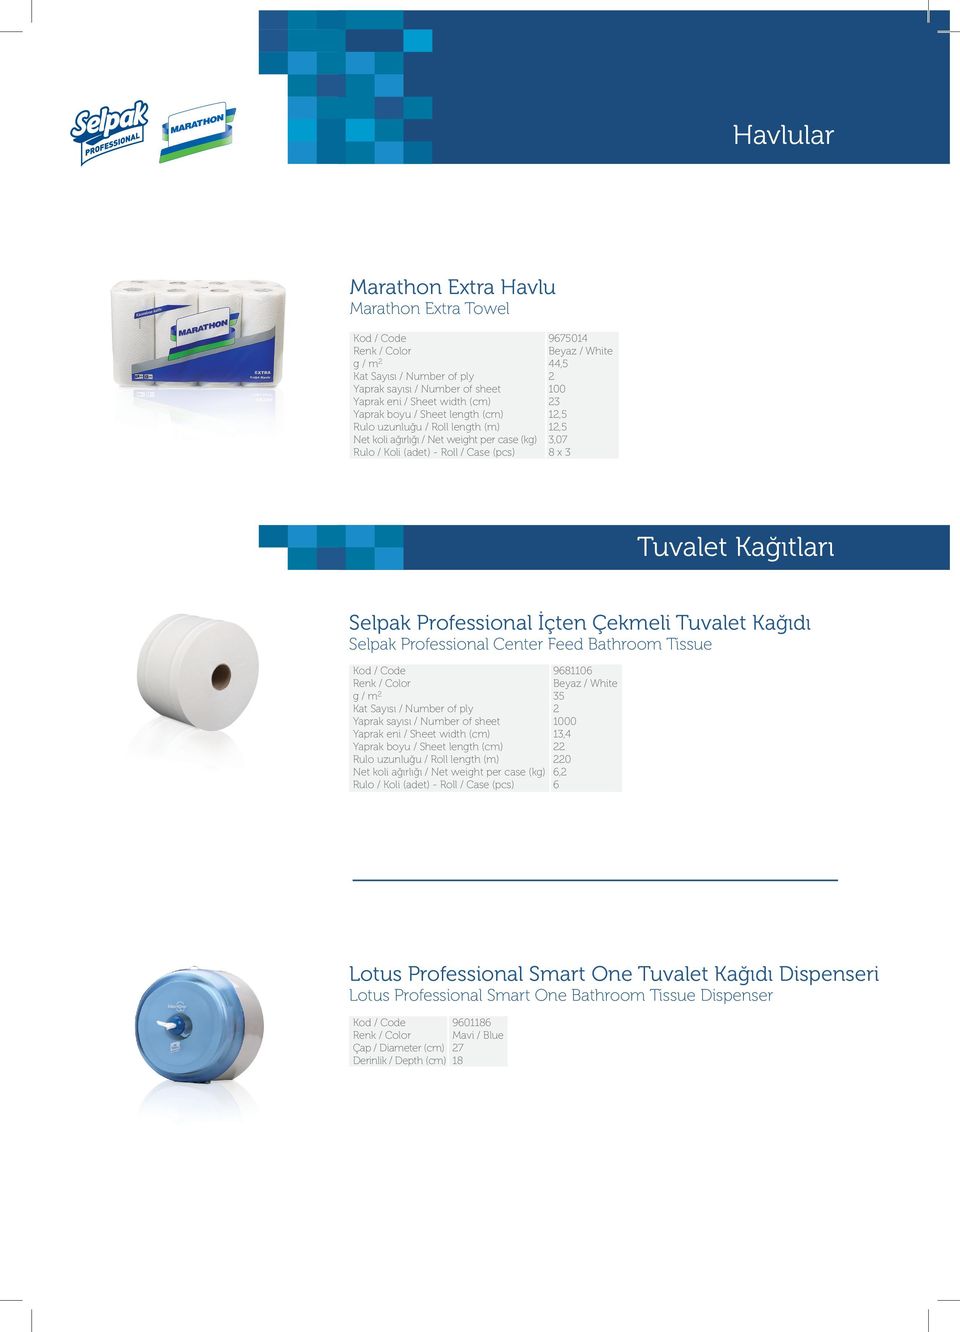 Bathroom Tissue g / m Rulo / Koli (adet) - Roll / Case (pcs) 9681106 35 1000 13,4 0 6, 6 Lotus Professional Smart One